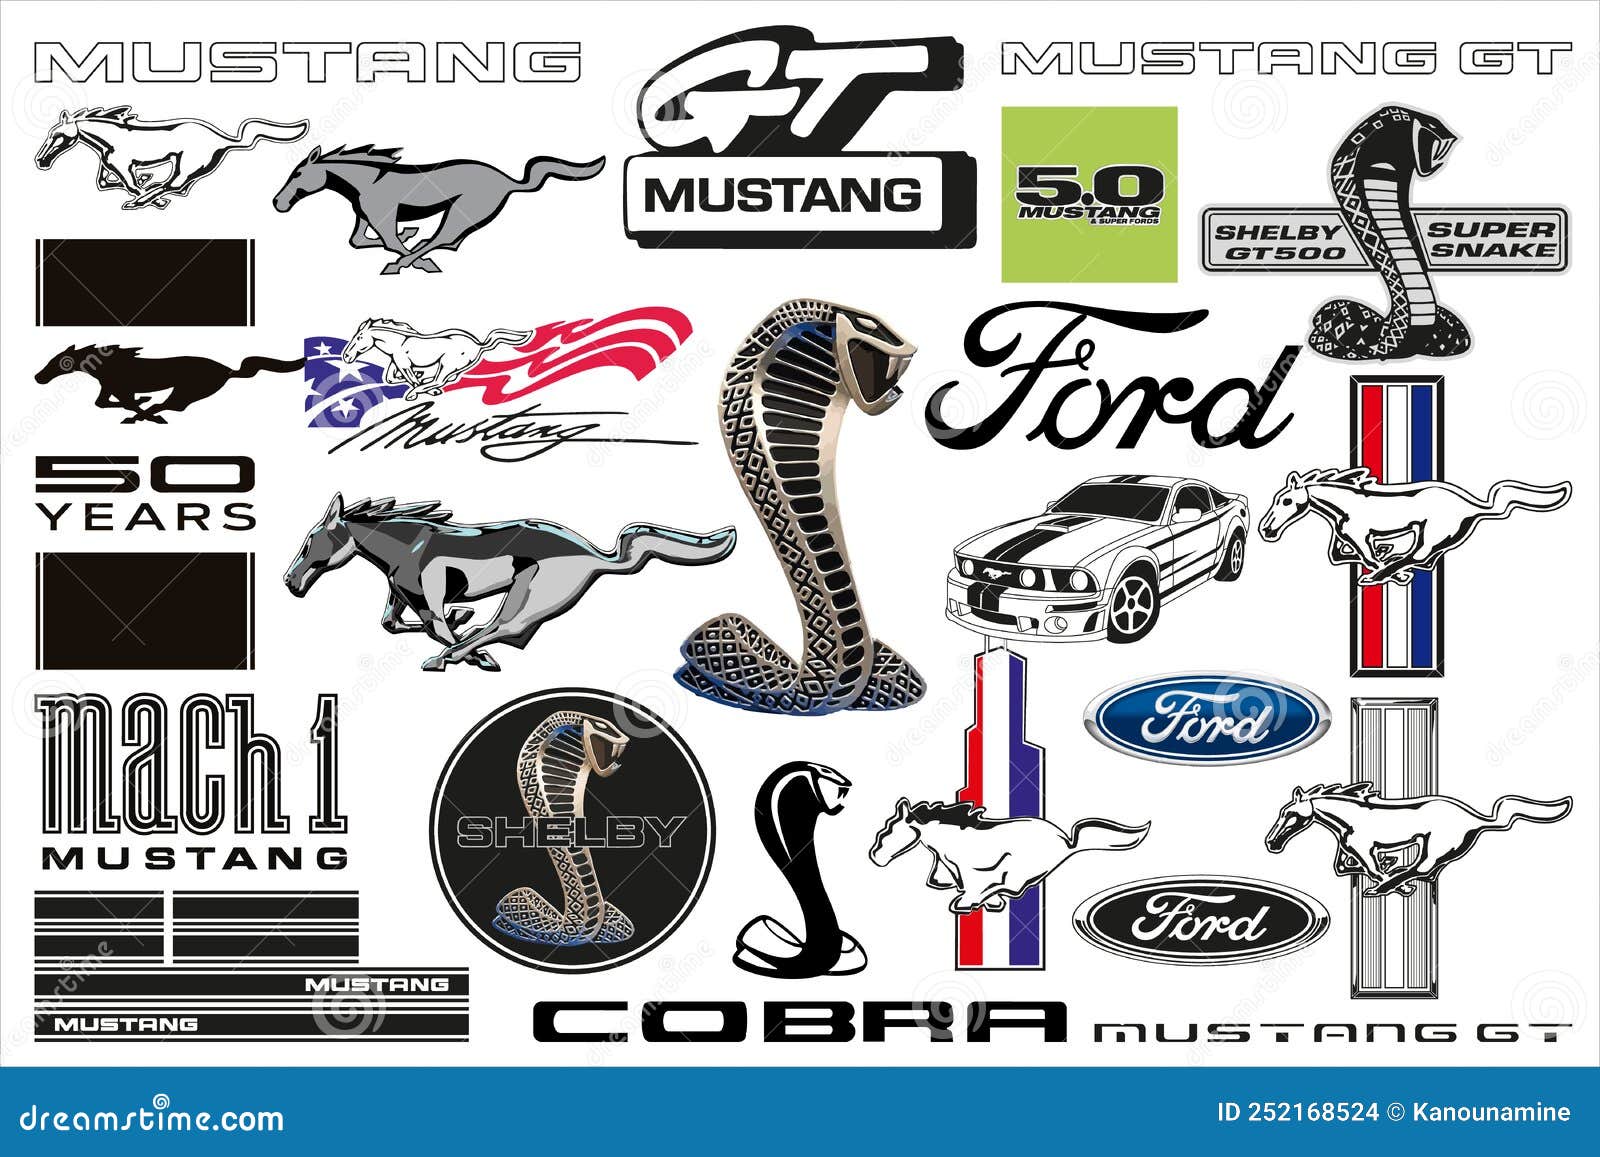 Logo Ford editorial image. Illustration of logo, ford - 124402130